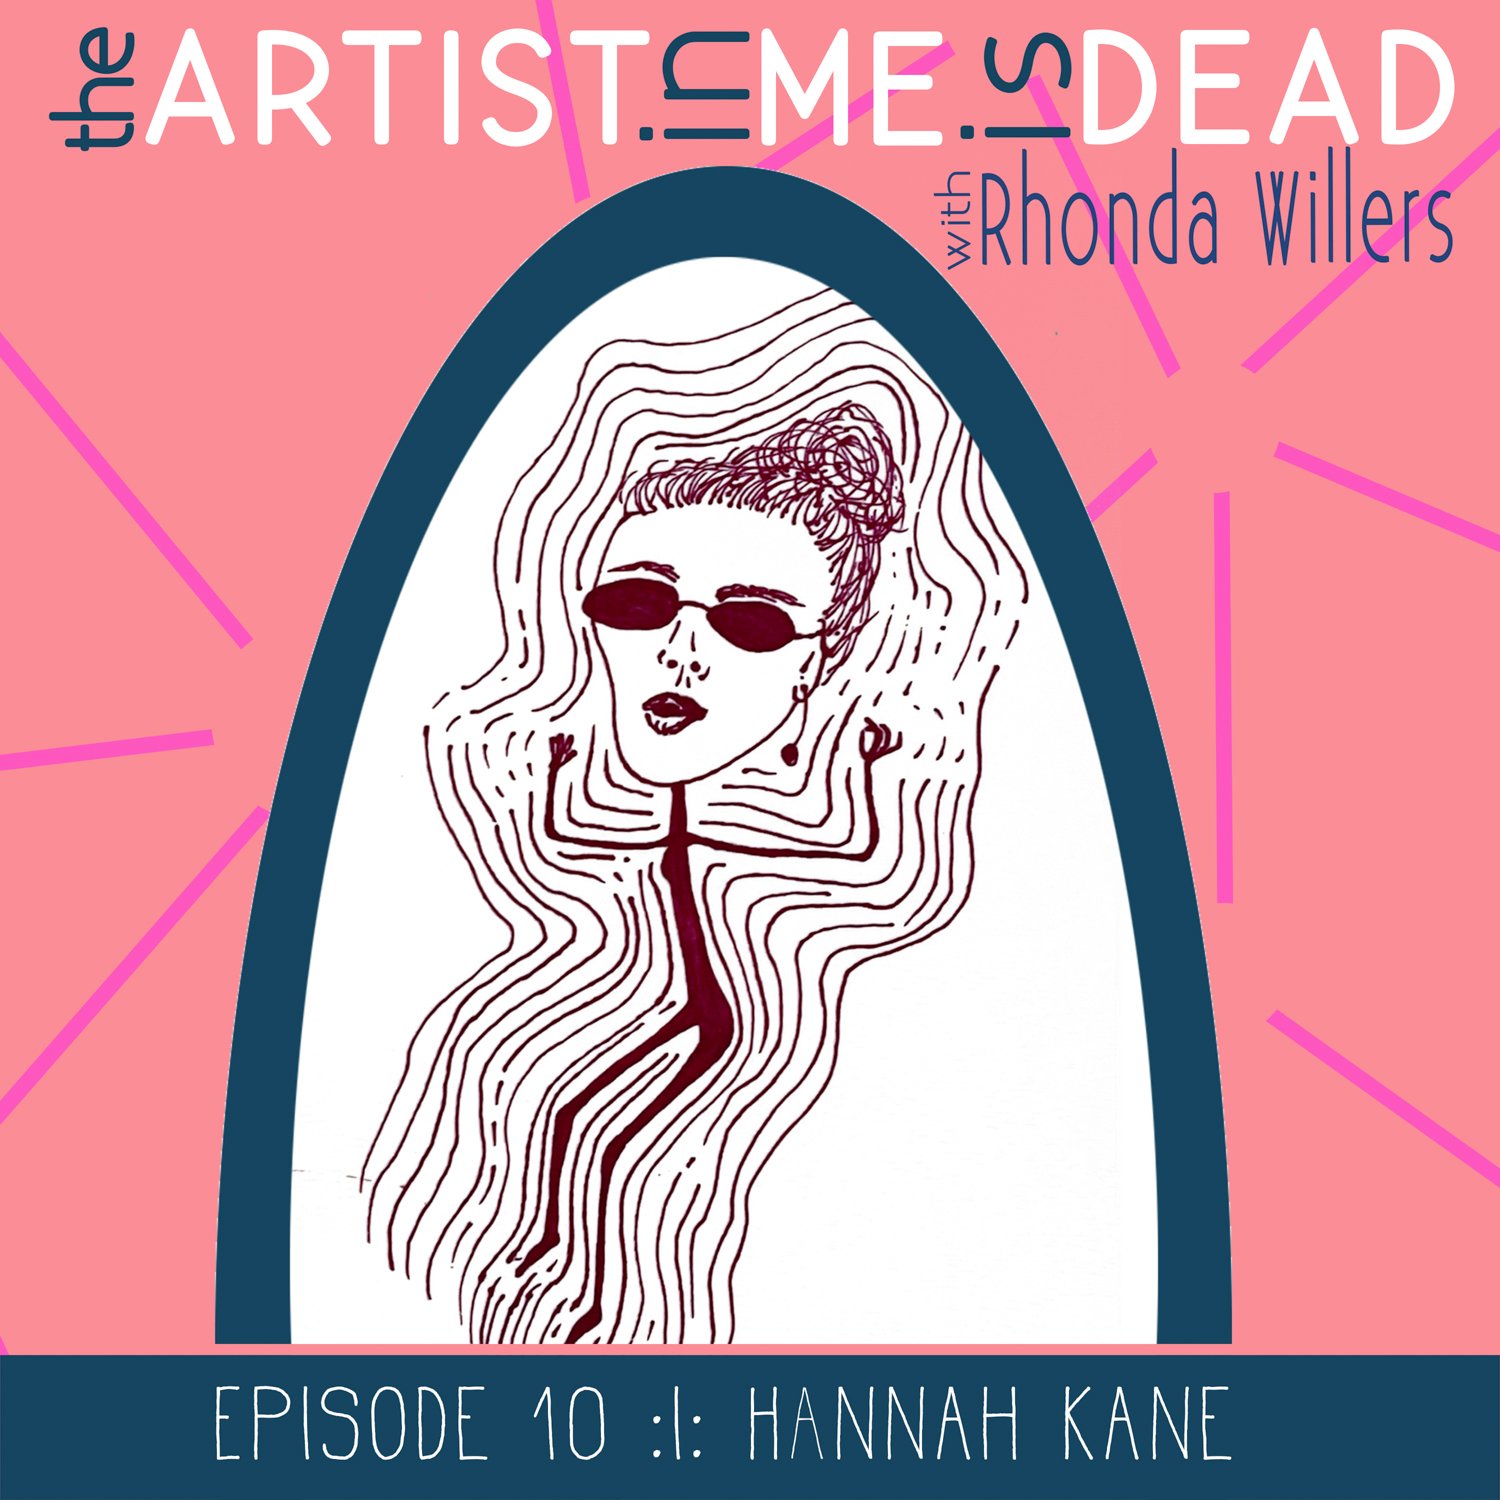 01_episode10_hannah_kane_the-artist-in-me-is-dead-podcast_season1.jpeg